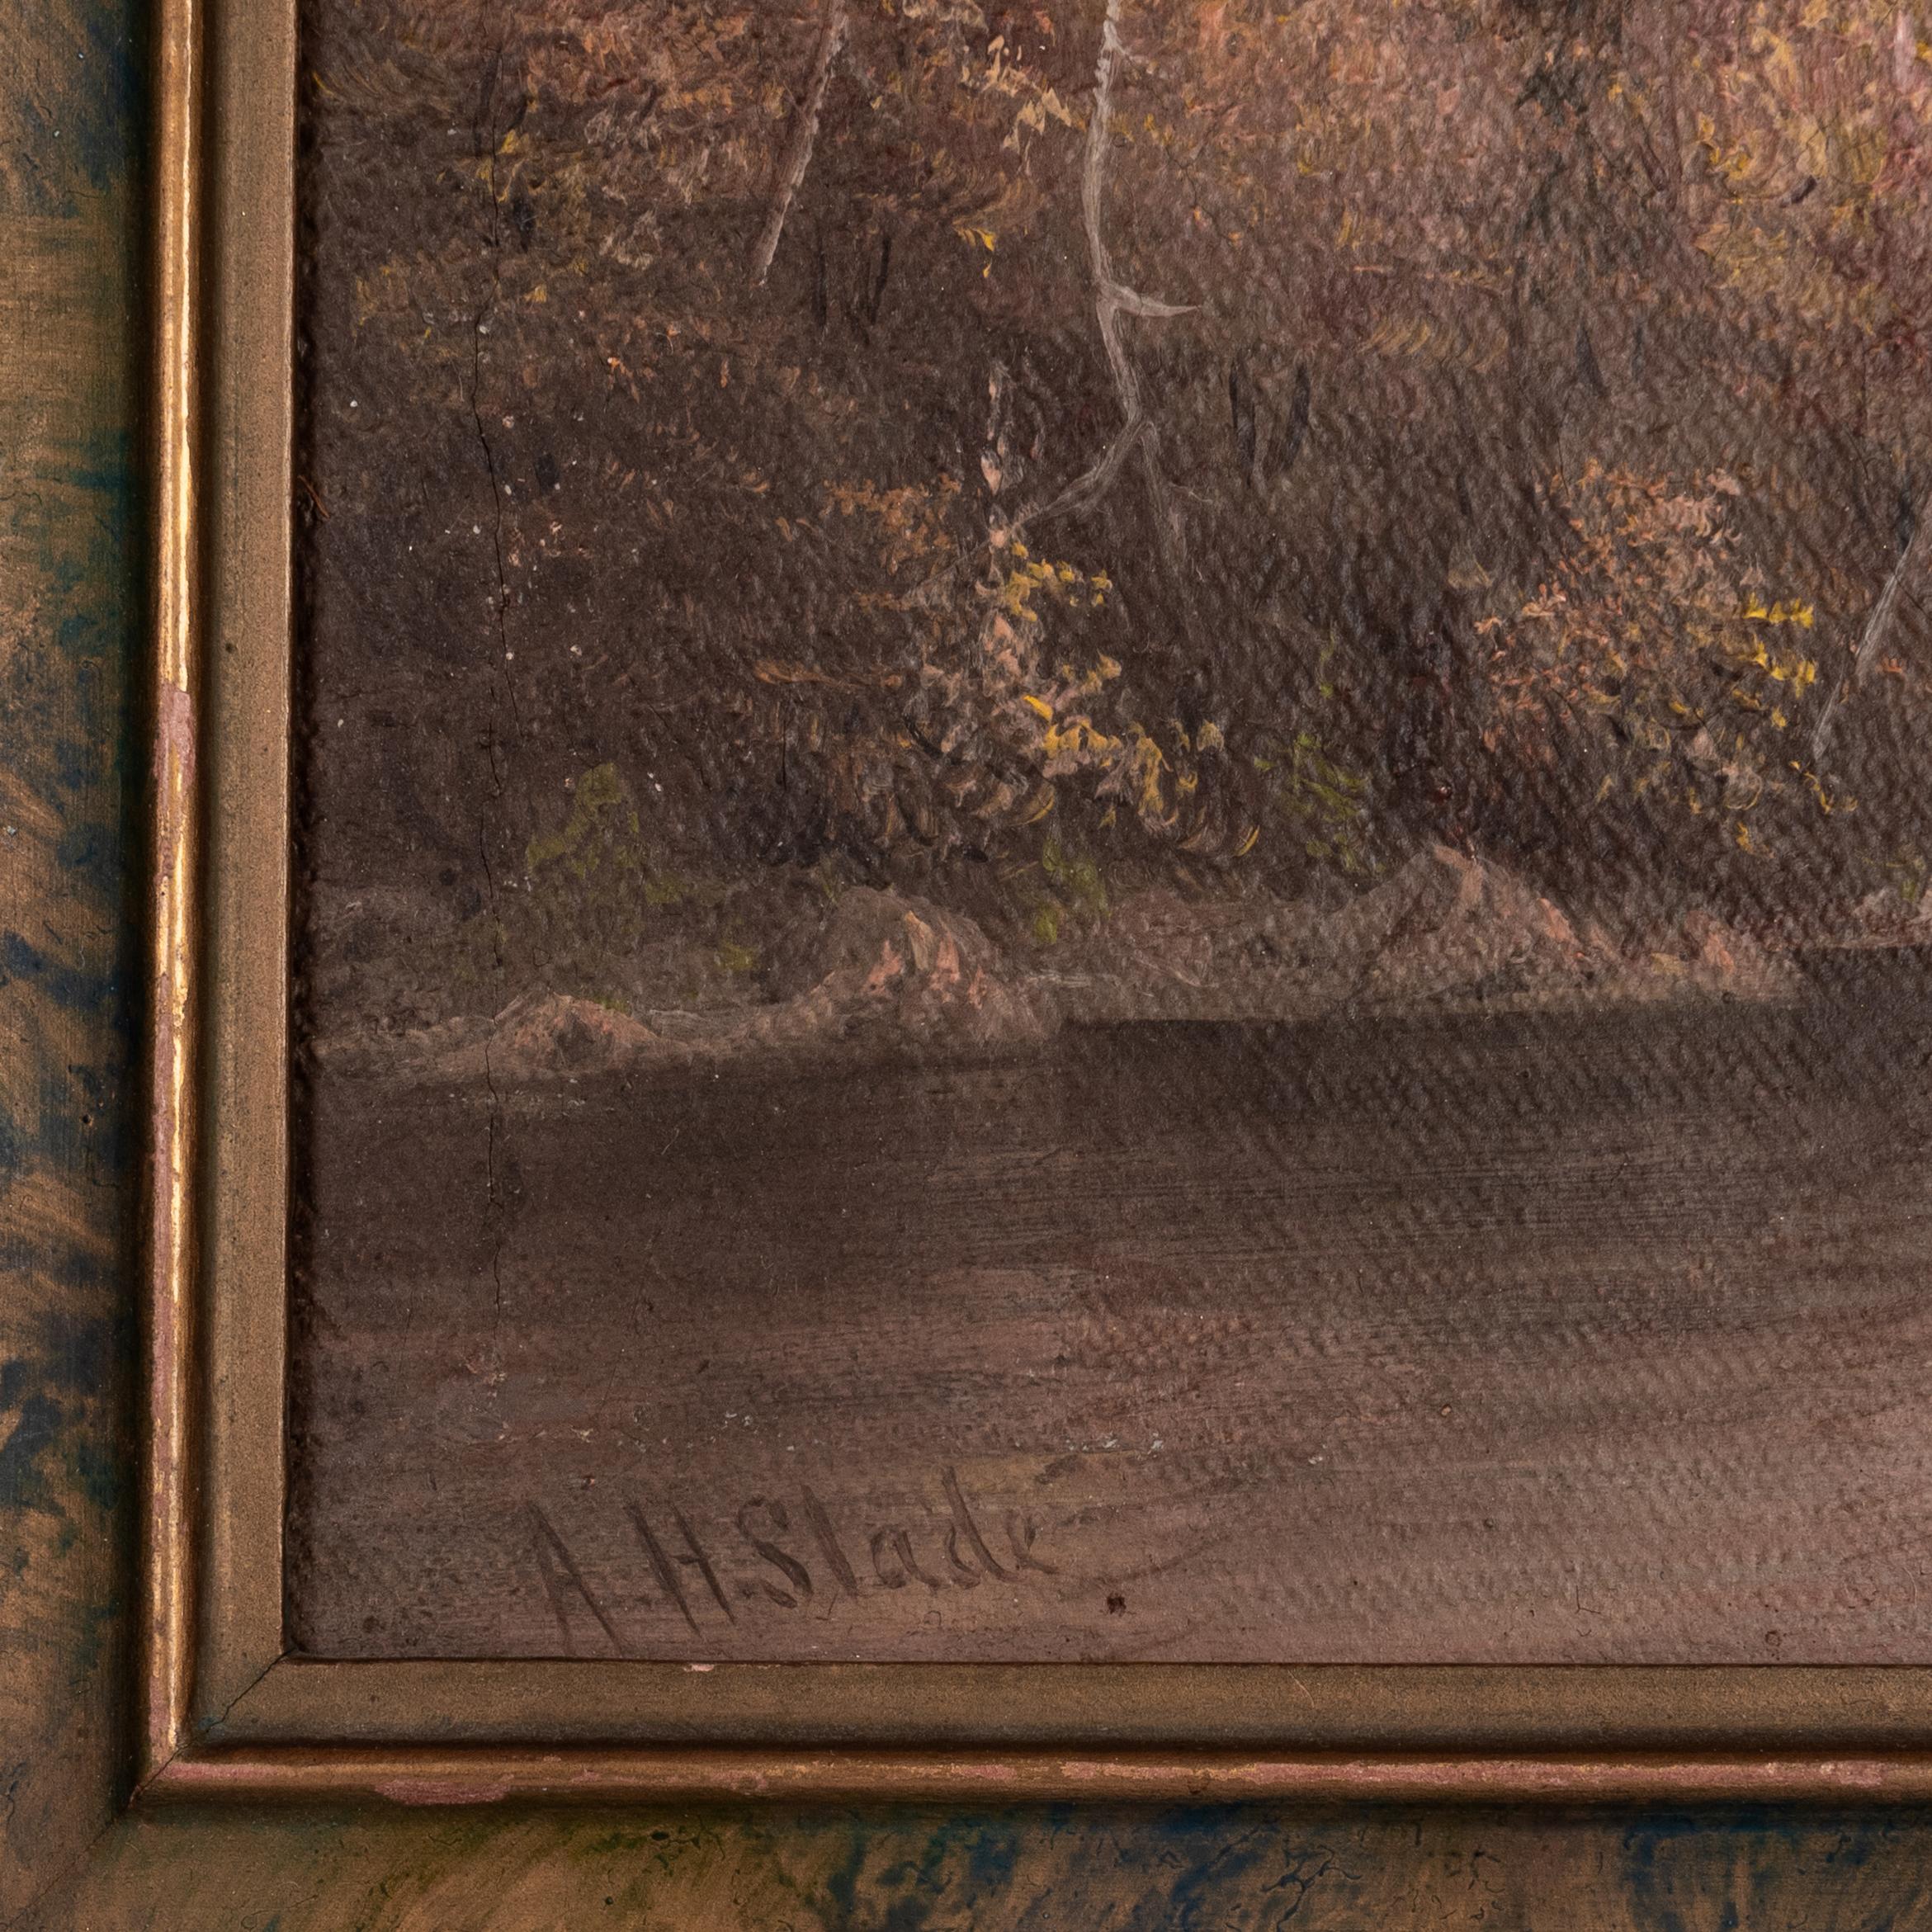 Antique American 19th C Realist California River Landscape Oil on Canvas 1888 For Sale 2